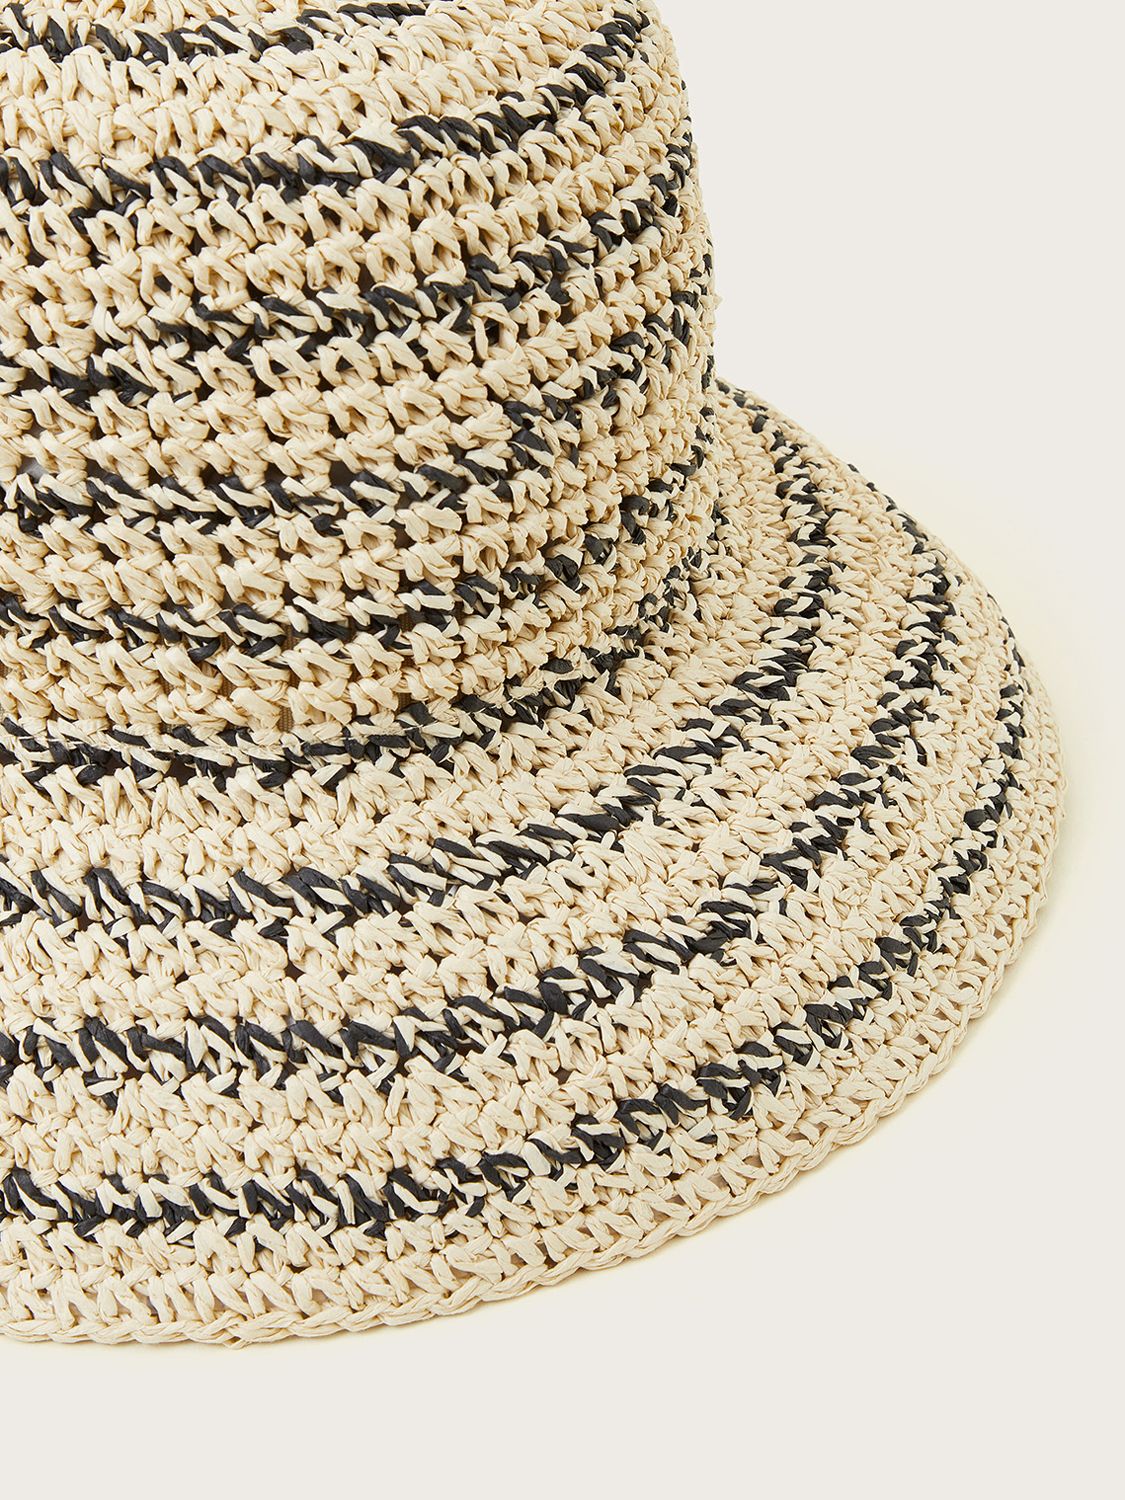 Buy Monsoon Crochet Summer Hat, Natural/Black Online at johnlewis.com